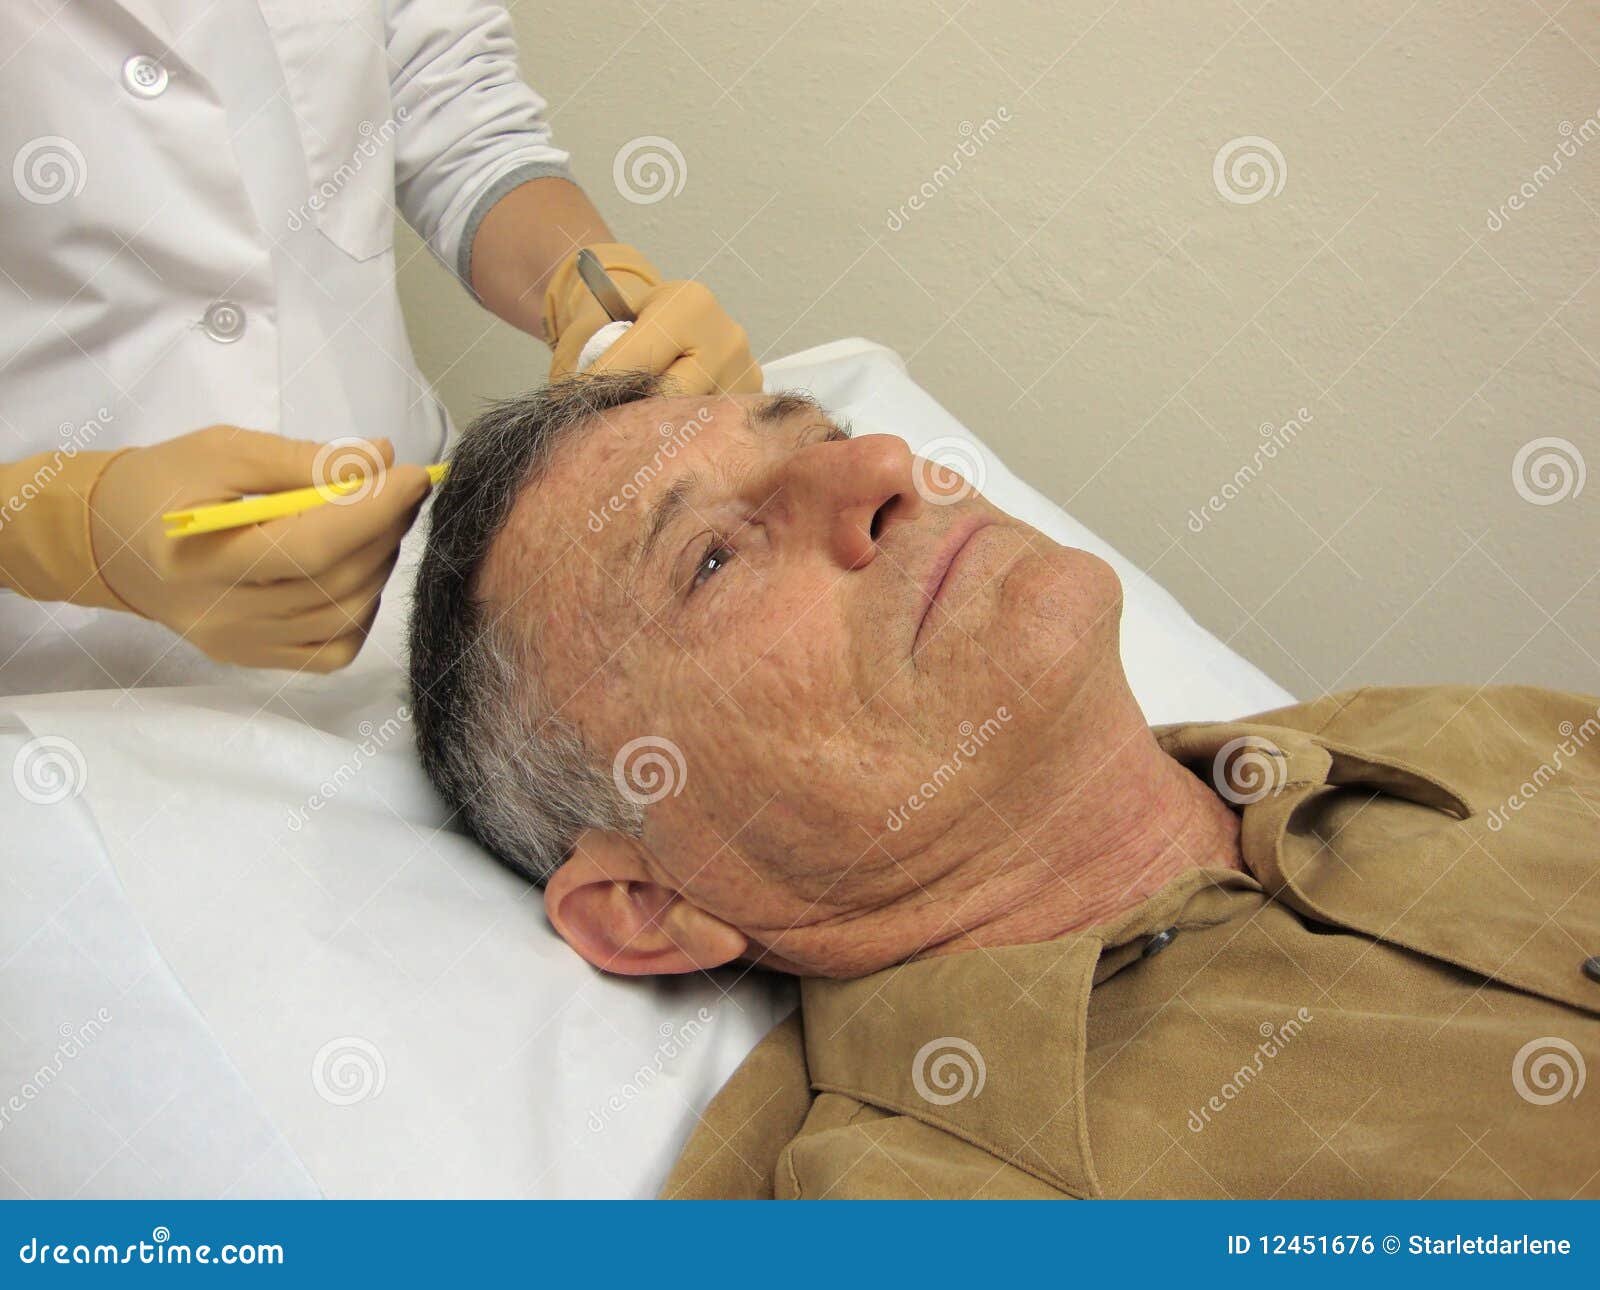 doctor performing medical procedure